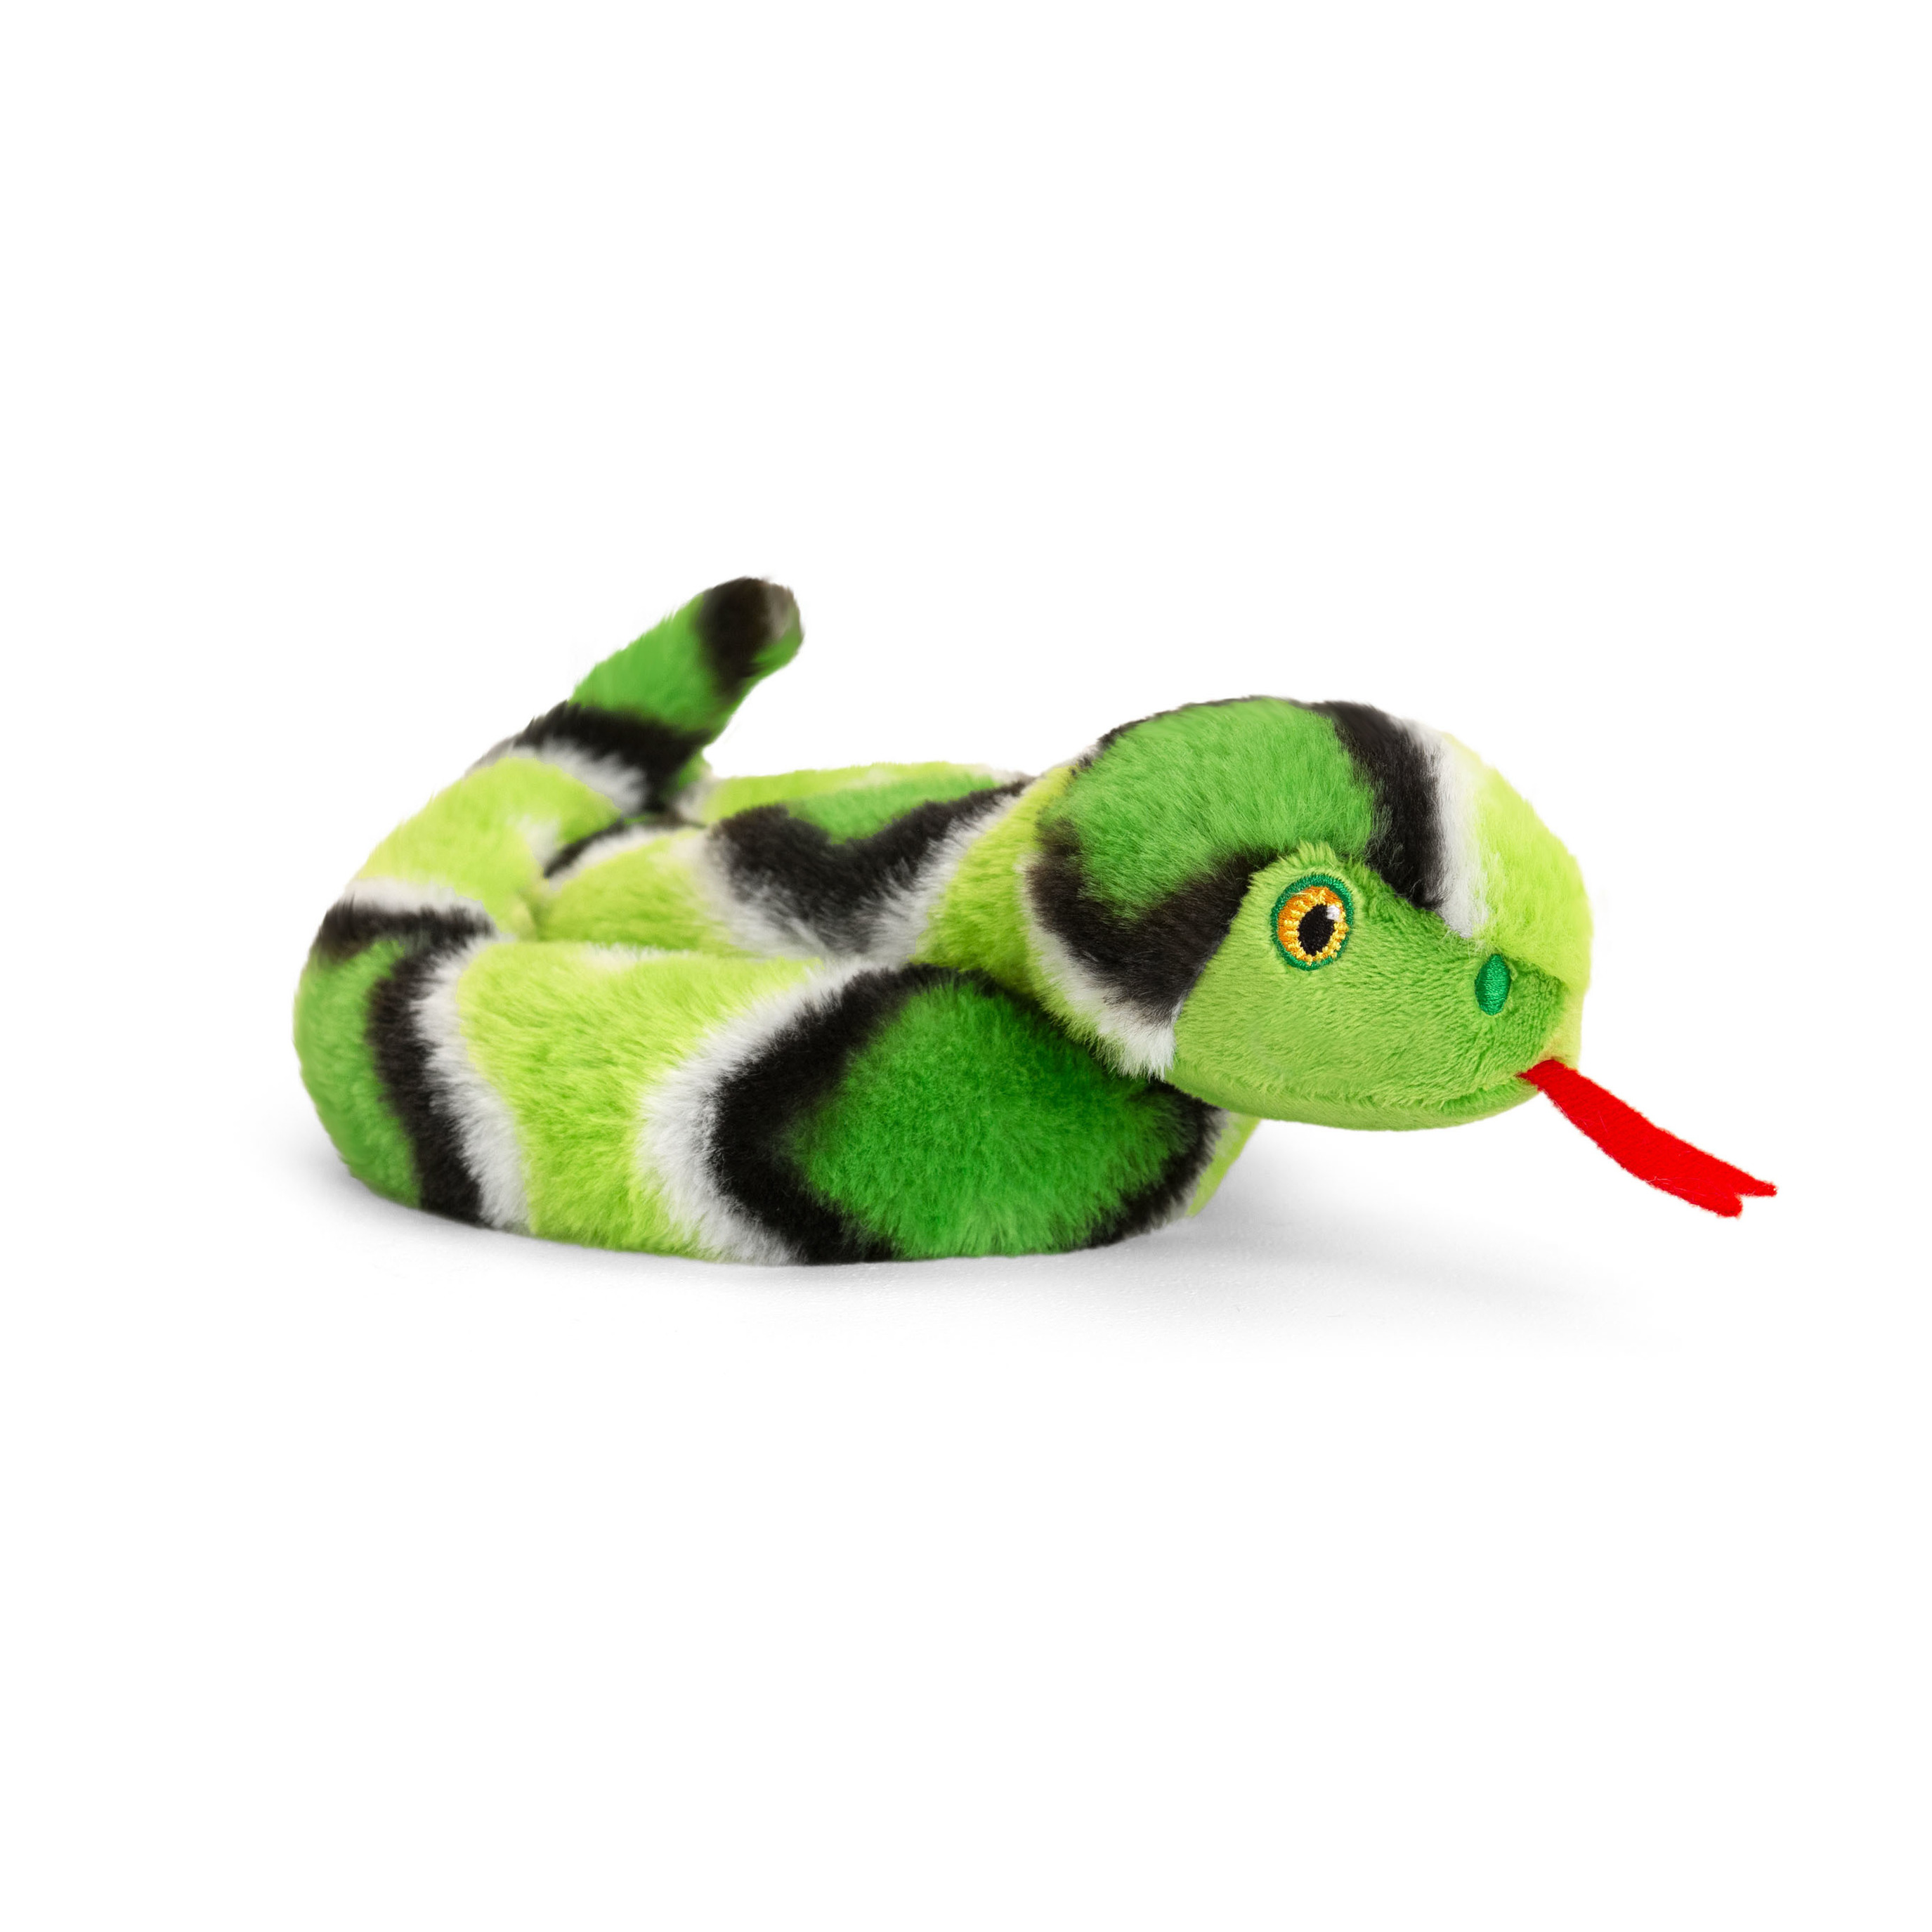 Pluche knuffel dieren kleine opgerolde slang groen 65 cm - Knuffelbeesten reptietel speelgoed